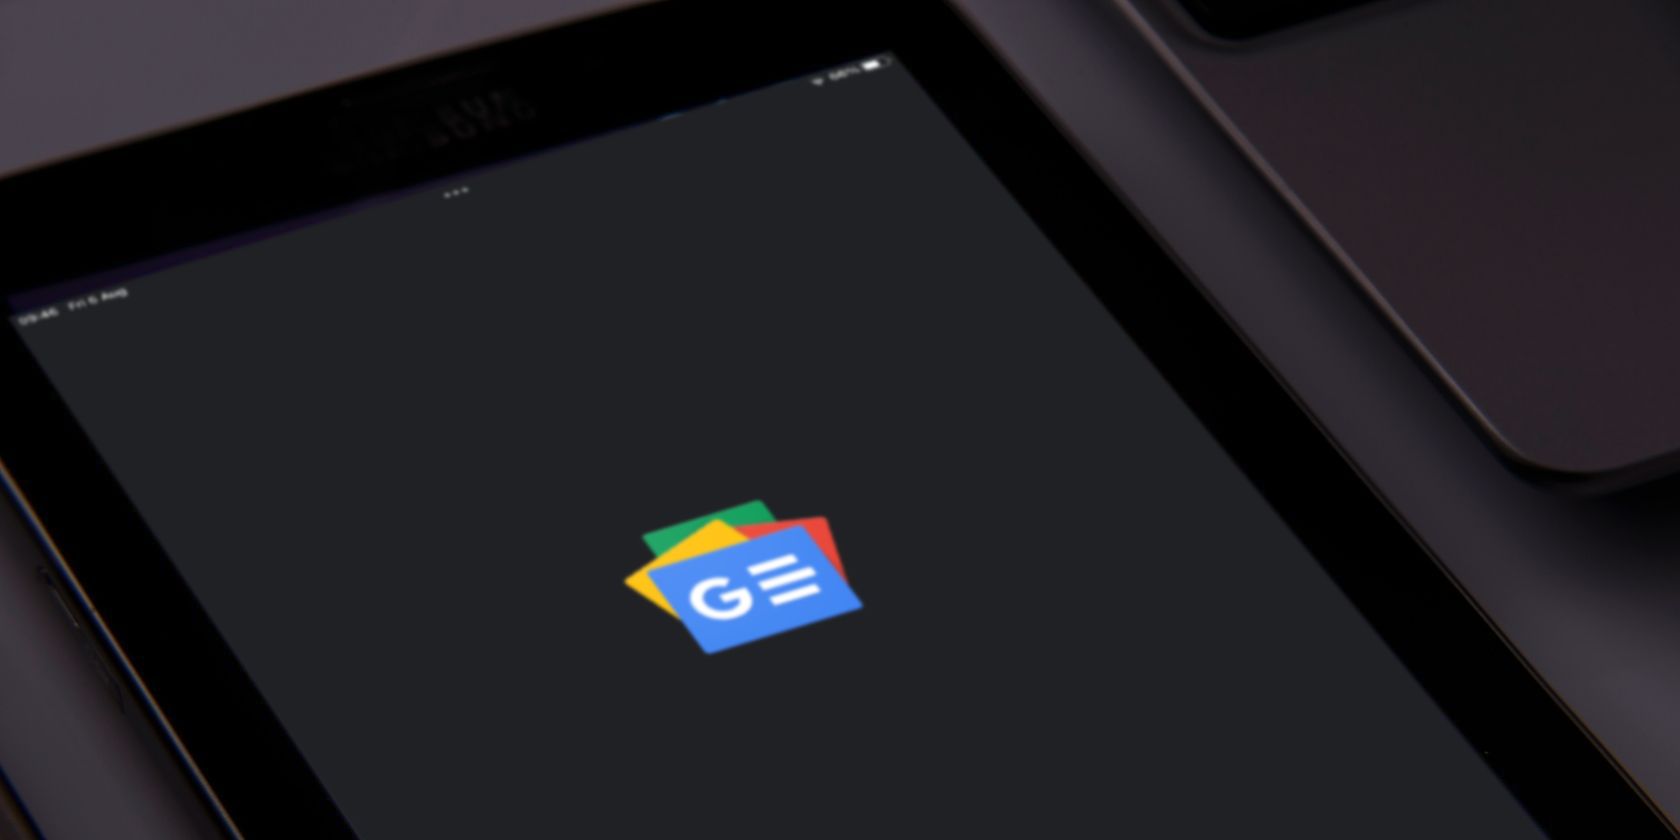 Google News splash screen on a tablet